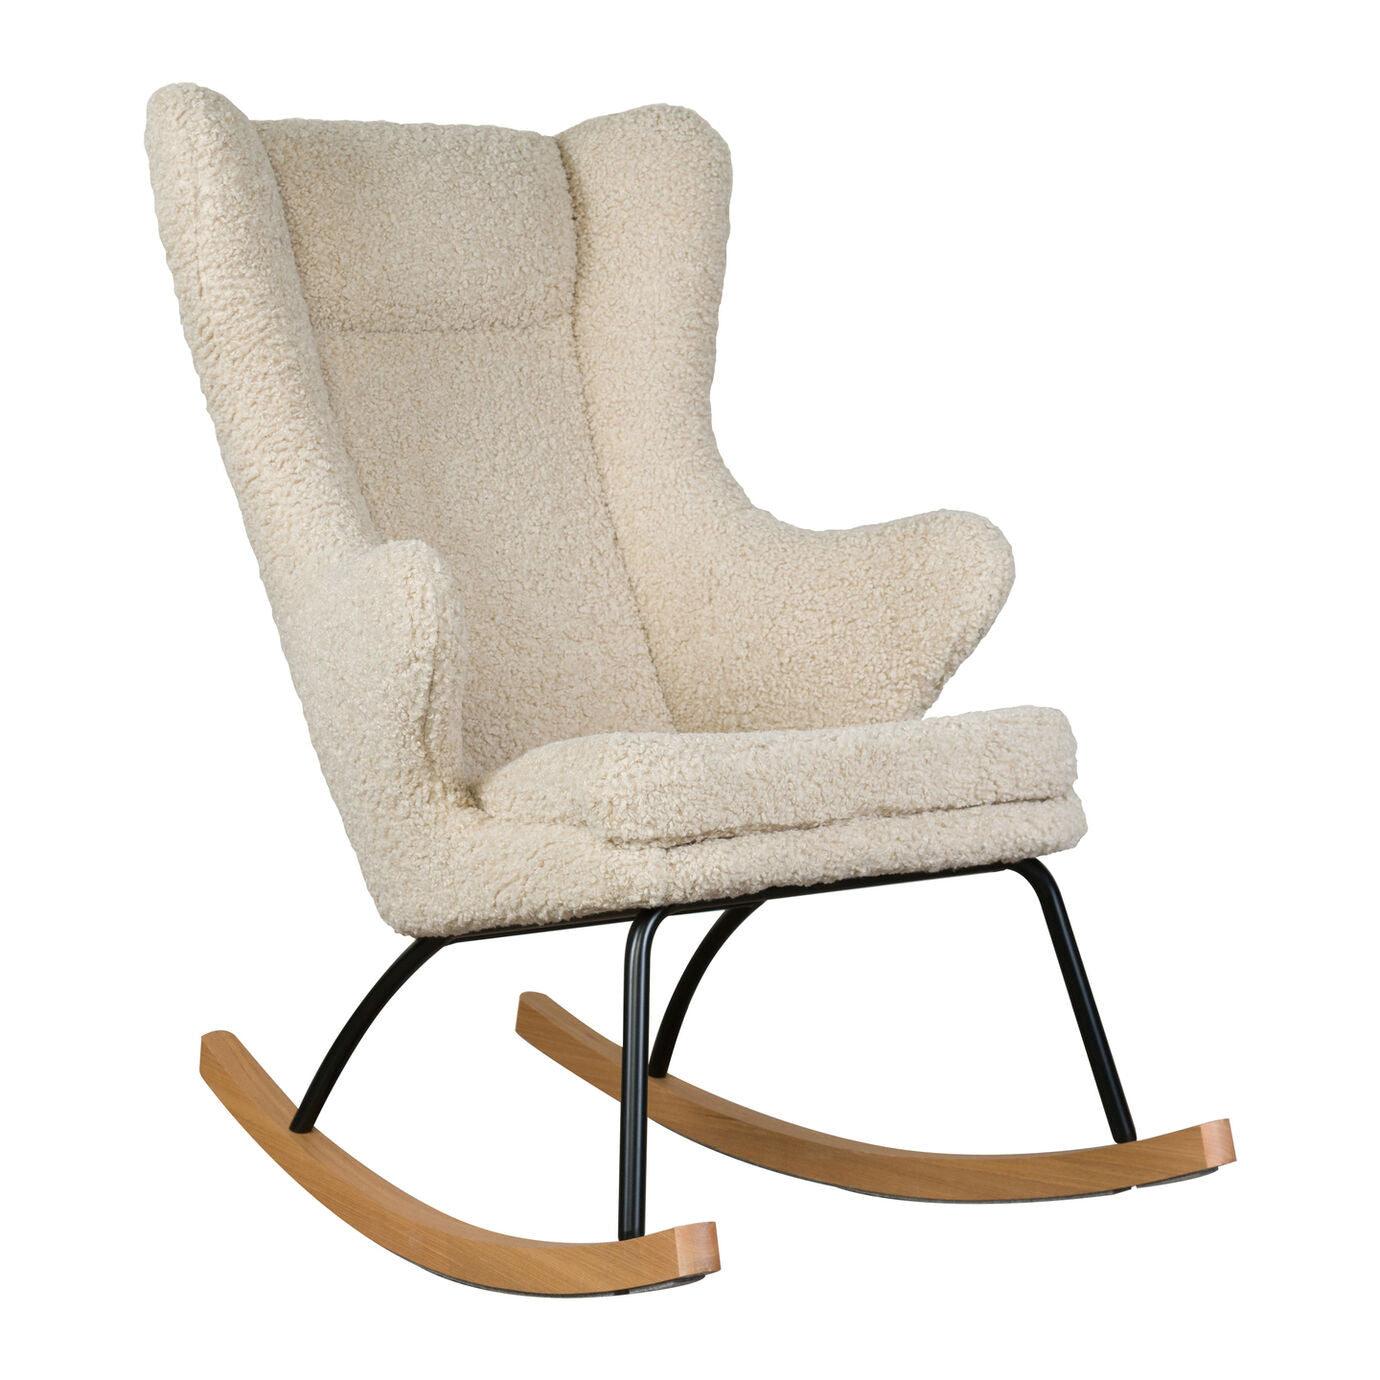 Quax - Rocking Adult Chair De Luxe - Sheep